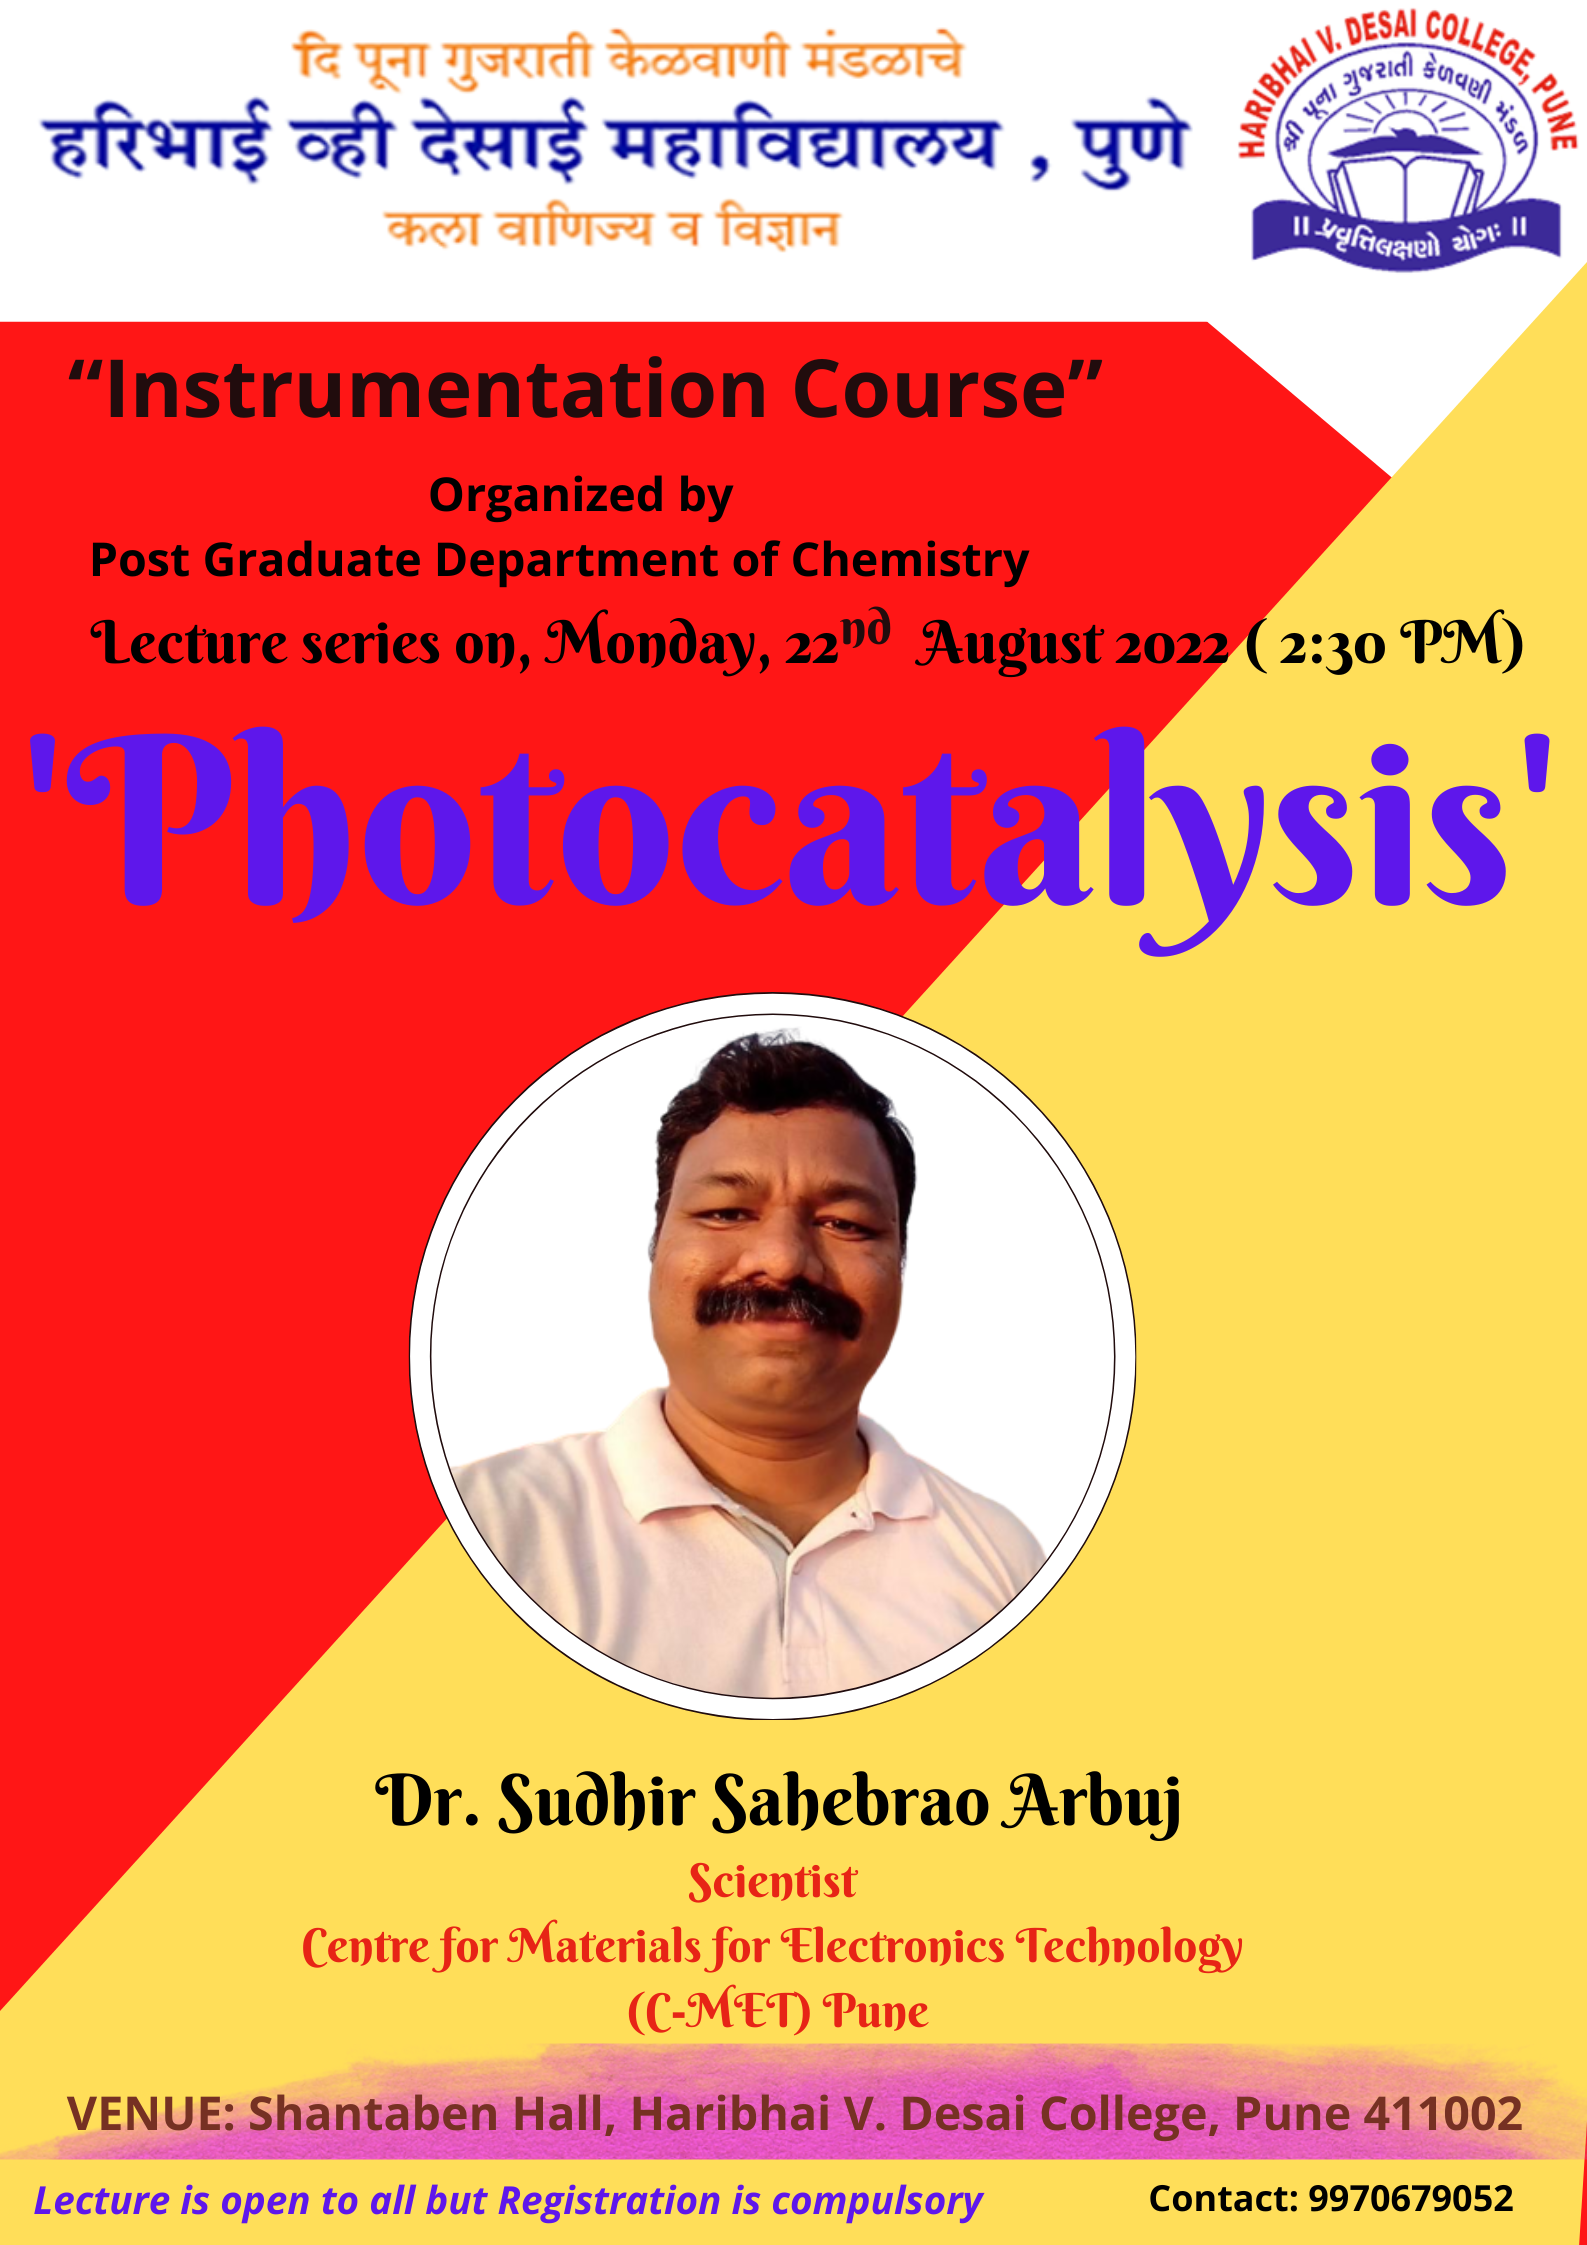 Instrumentation Course Lecture Series at H.V. Desai College